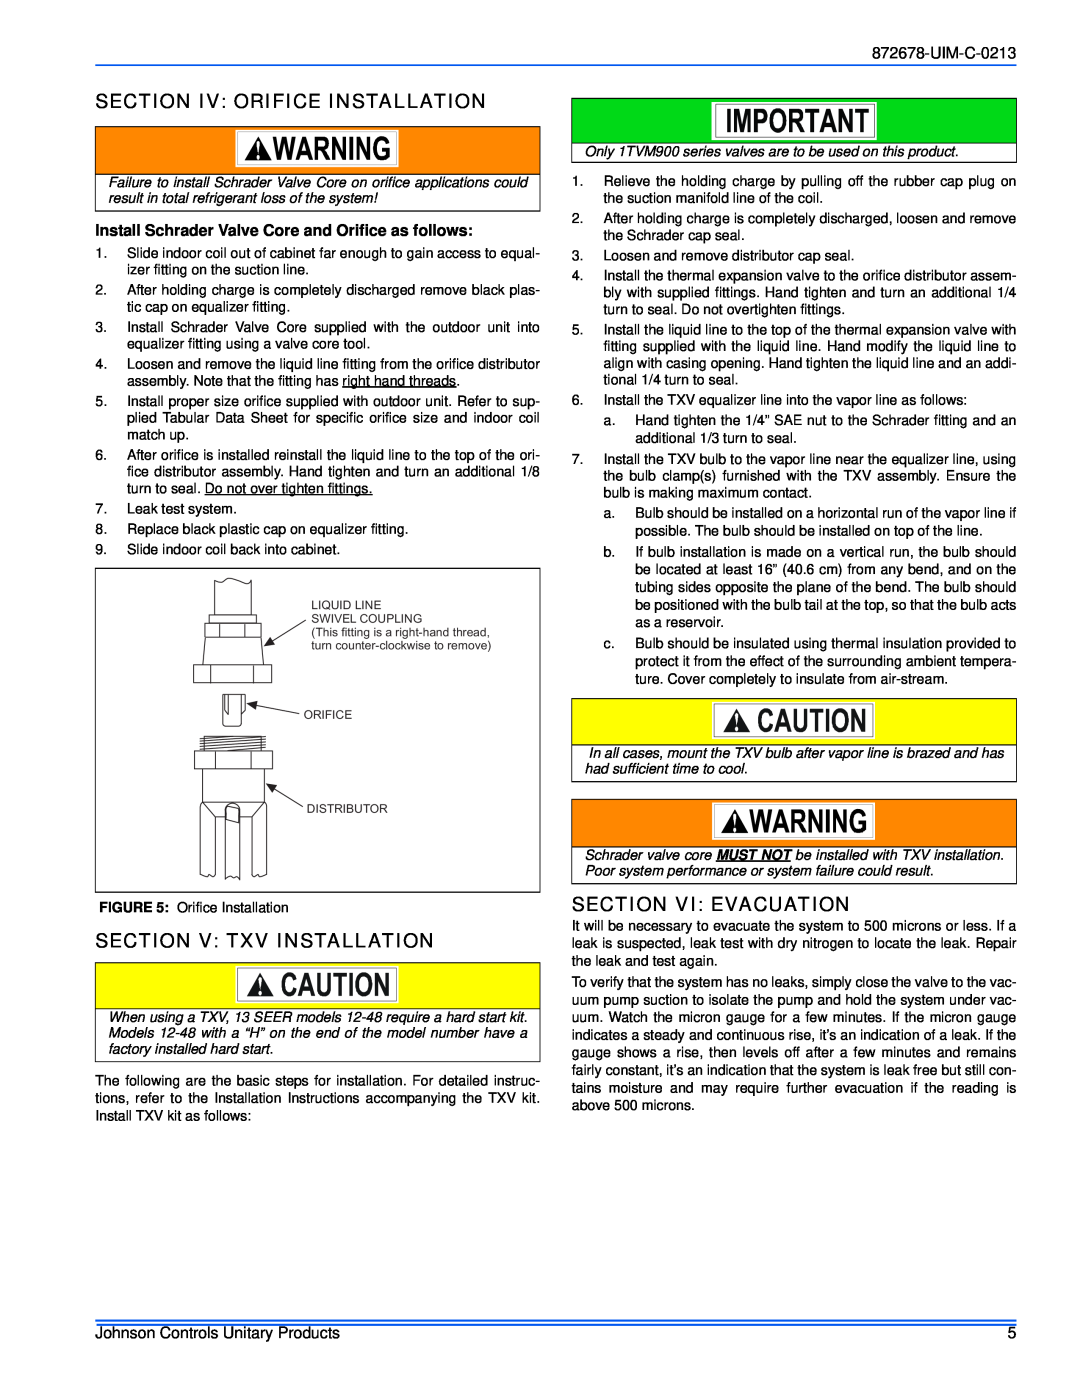 Johnson Controls F) SERIES Section Iv Orifice Installation, Section V Txv Installation, Section Vi Evacuation, UIM-C-0213 